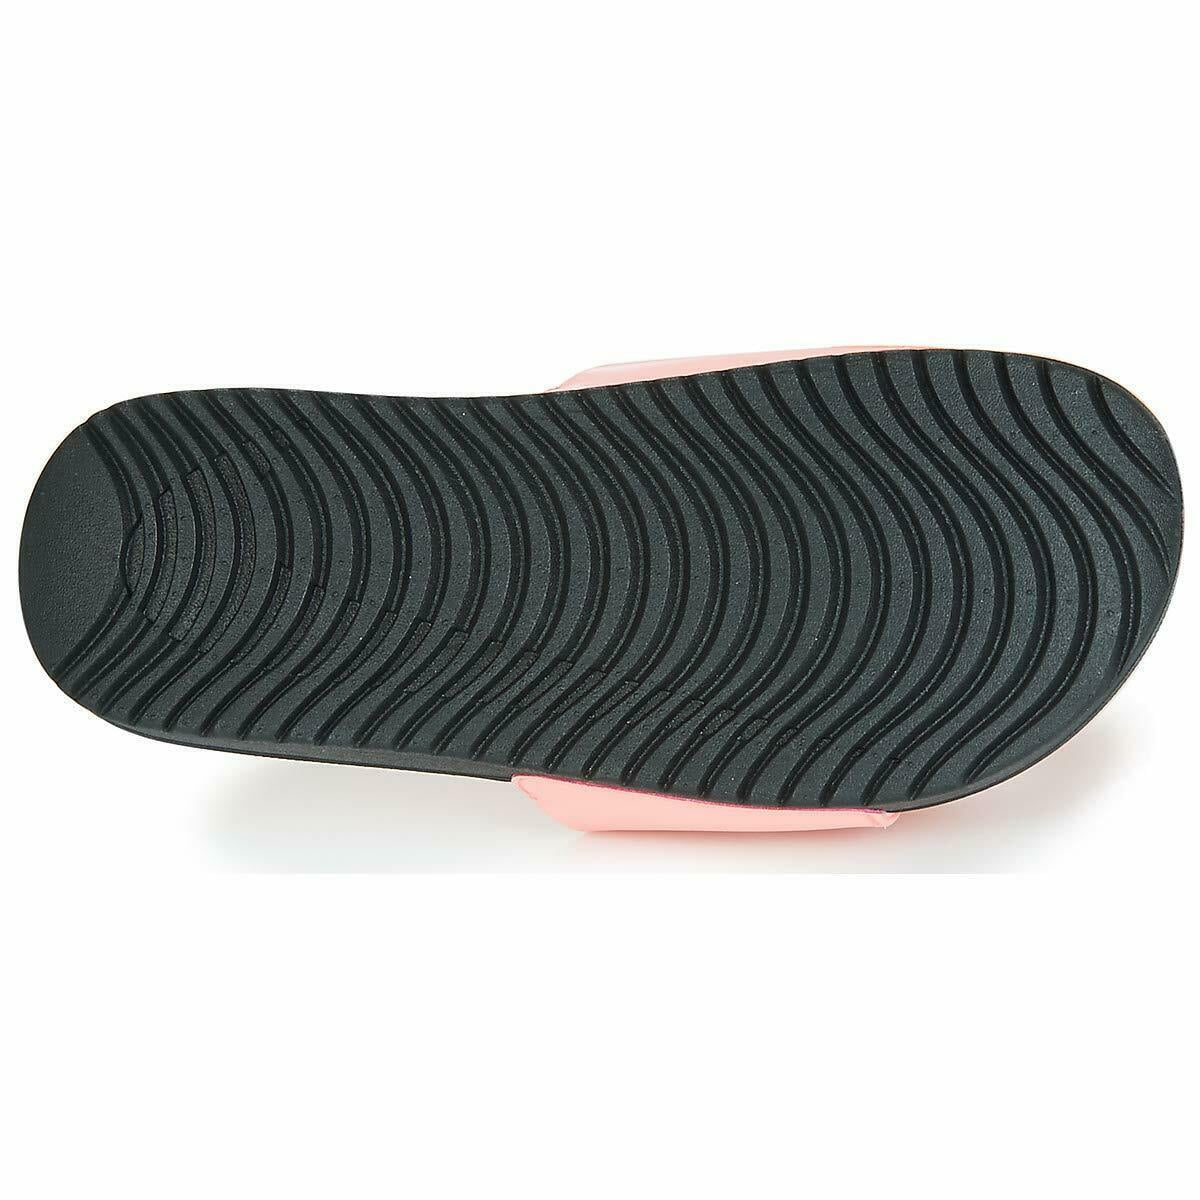 Nike Kawa Vday Slide Unisex/Child shoe size kid 2 Casual BQ7427 